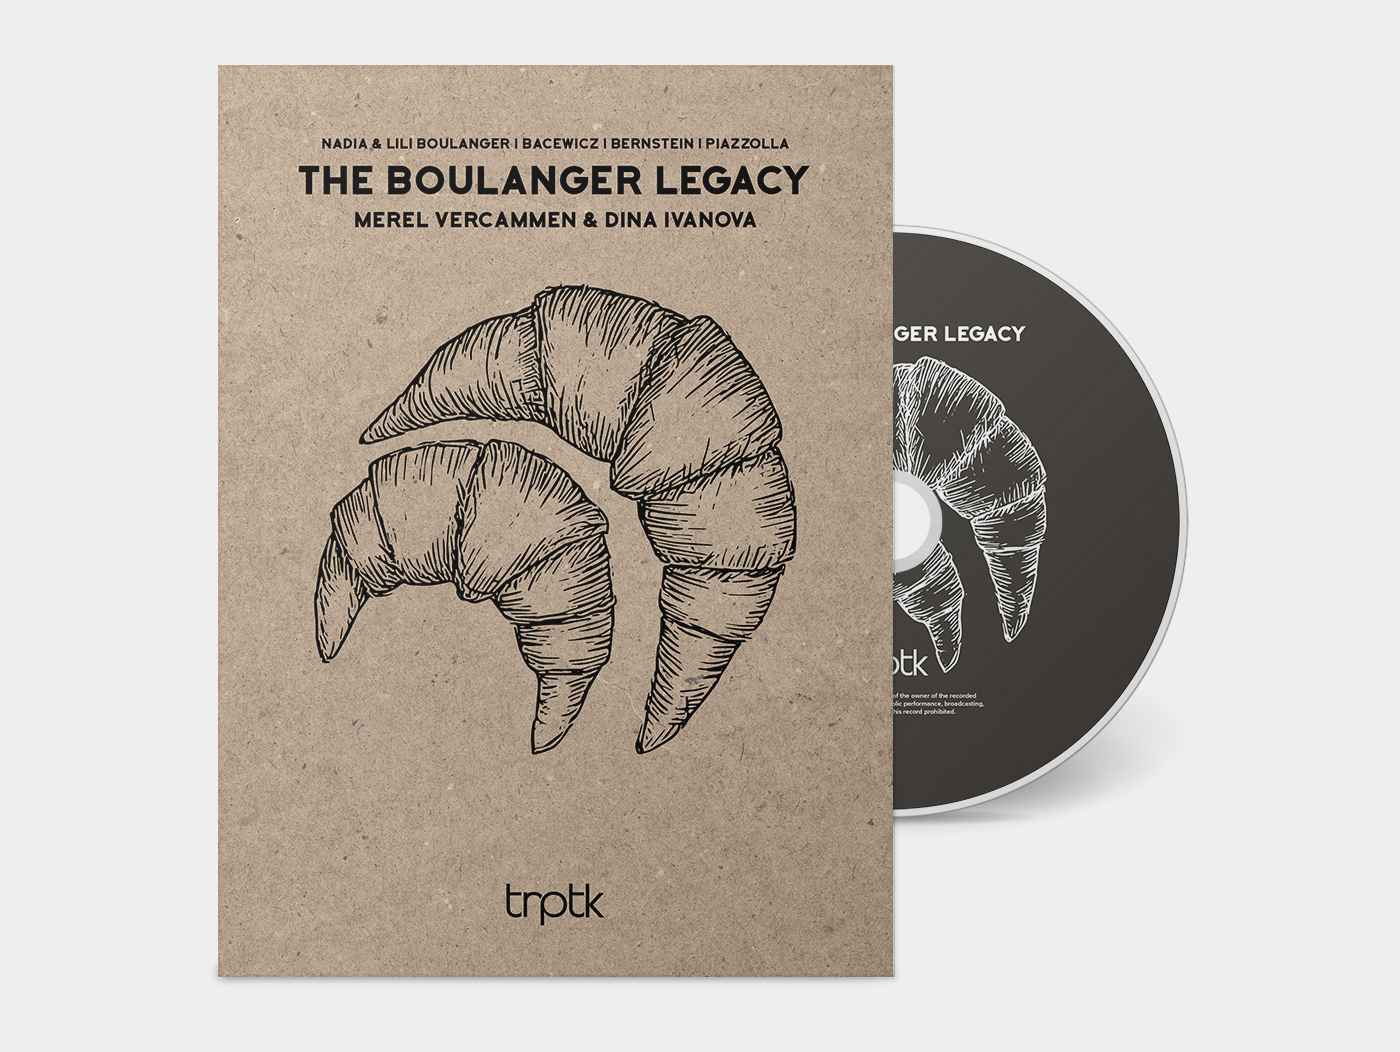 The Boulanger Legacy